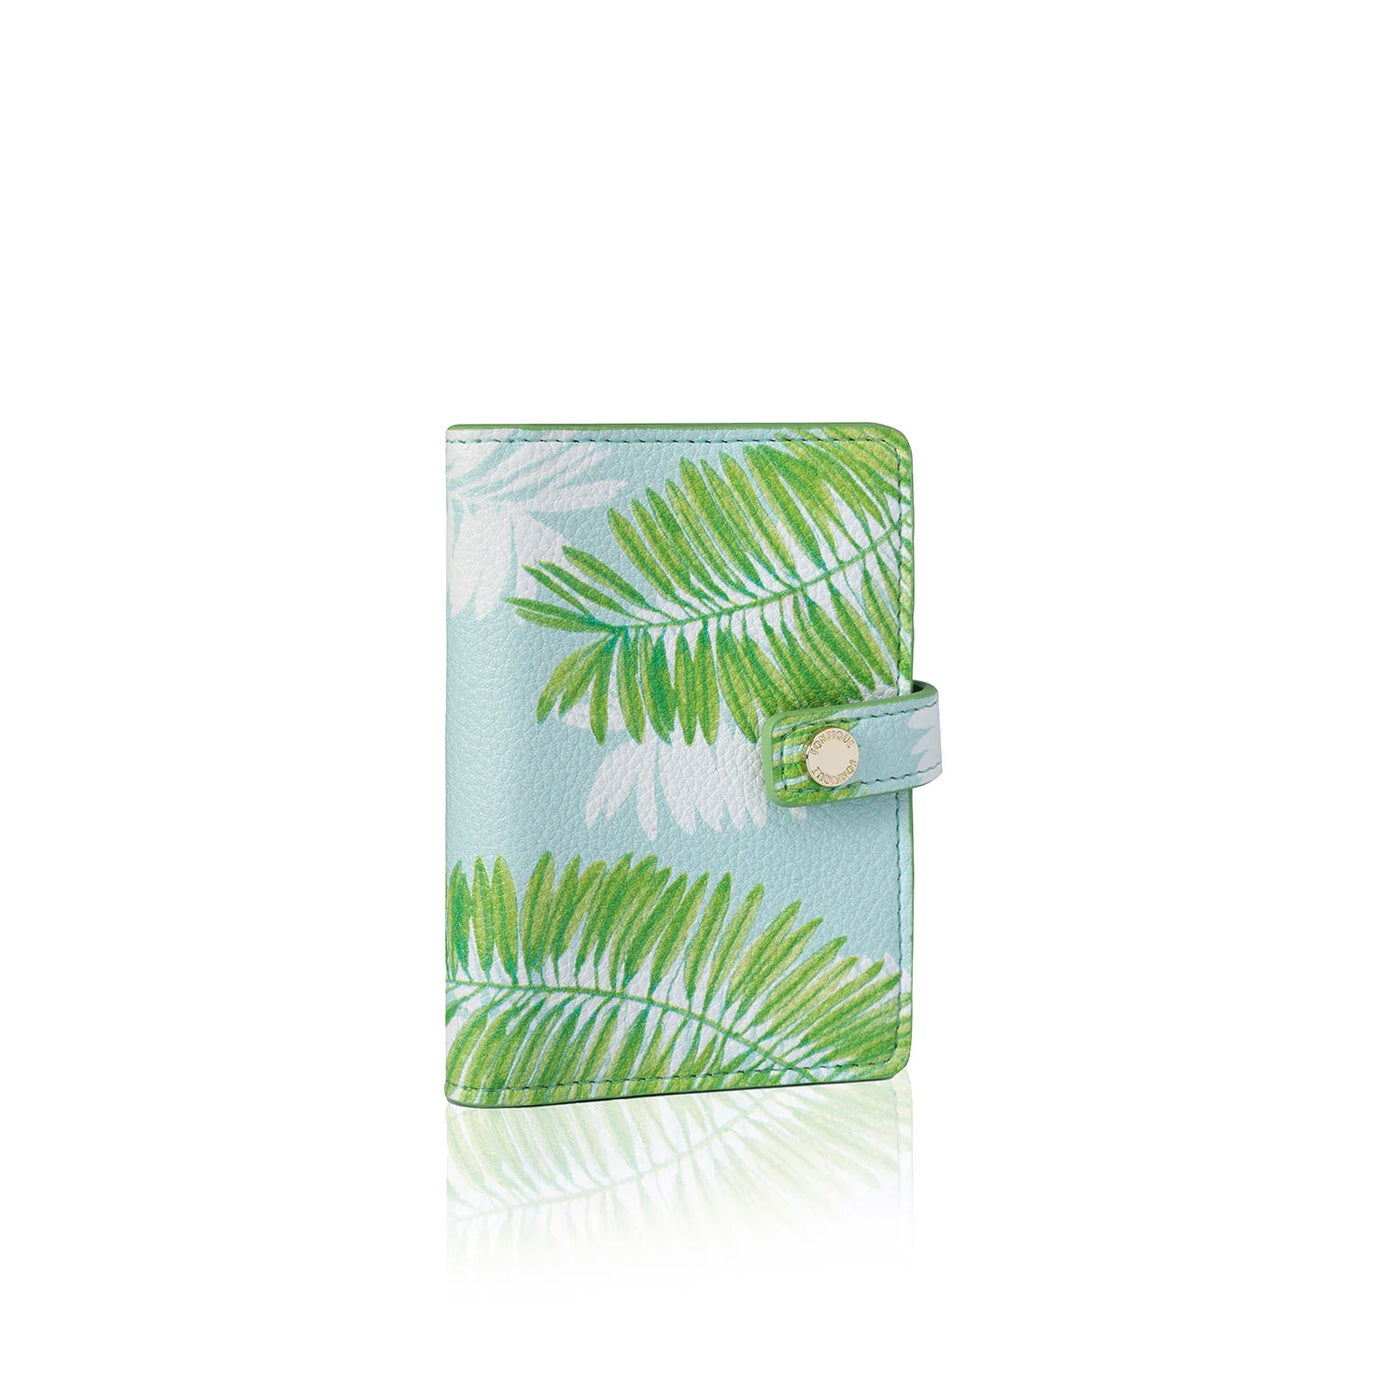 FONFIQUE - Destra Kartlık Yeşil Palmiyeler